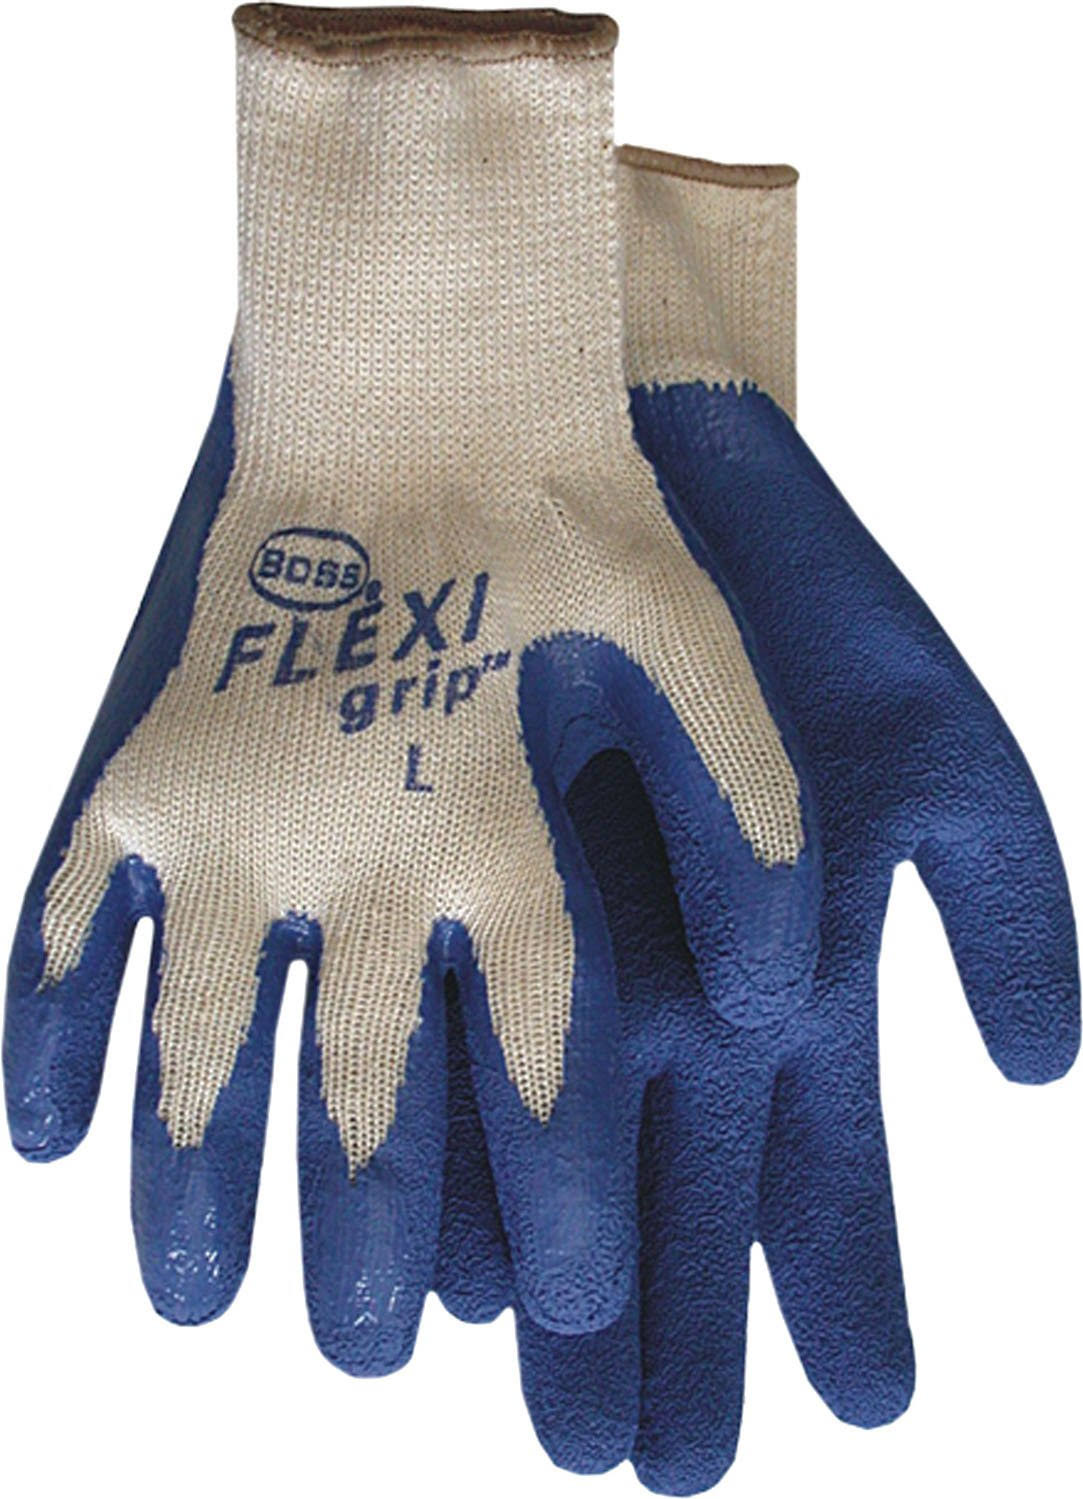 Boss 8426L Flexi Grip Knit Gloves - Large